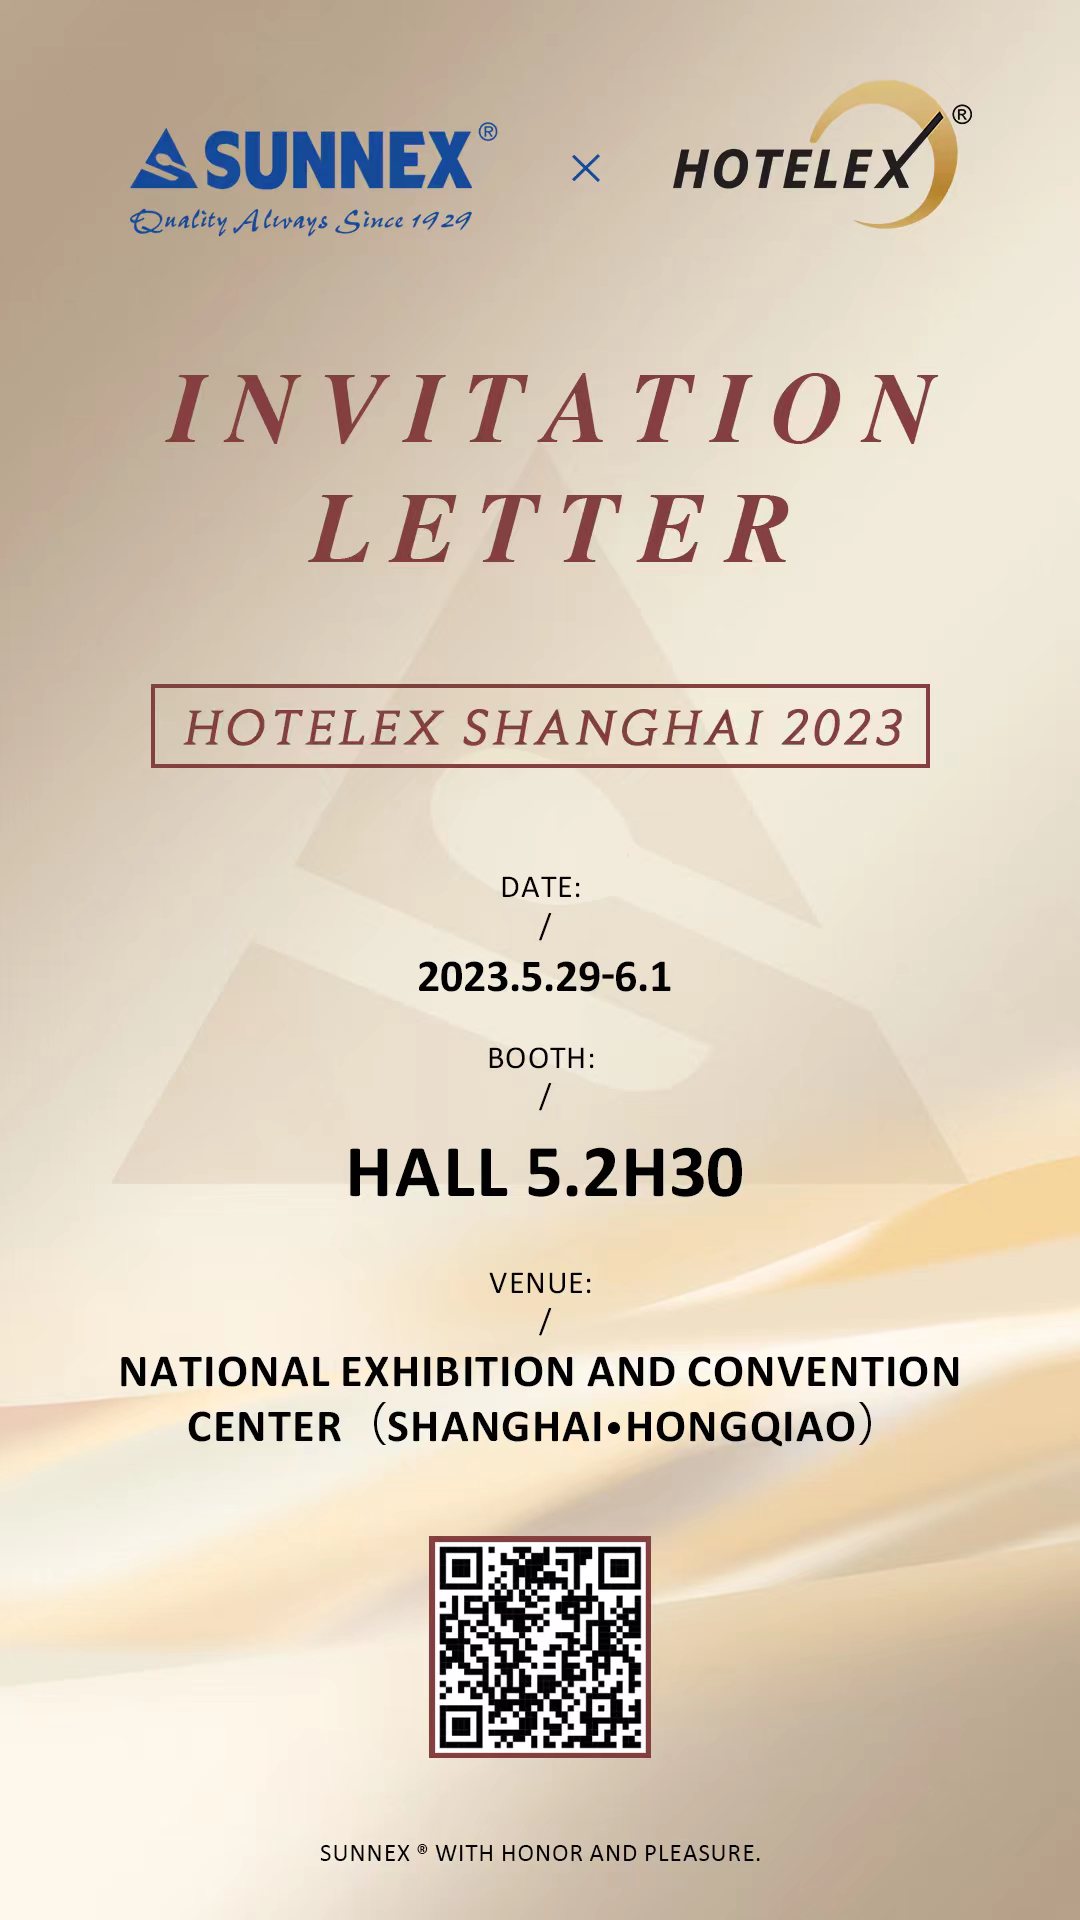 HOTELEX SHANGHAI 2023